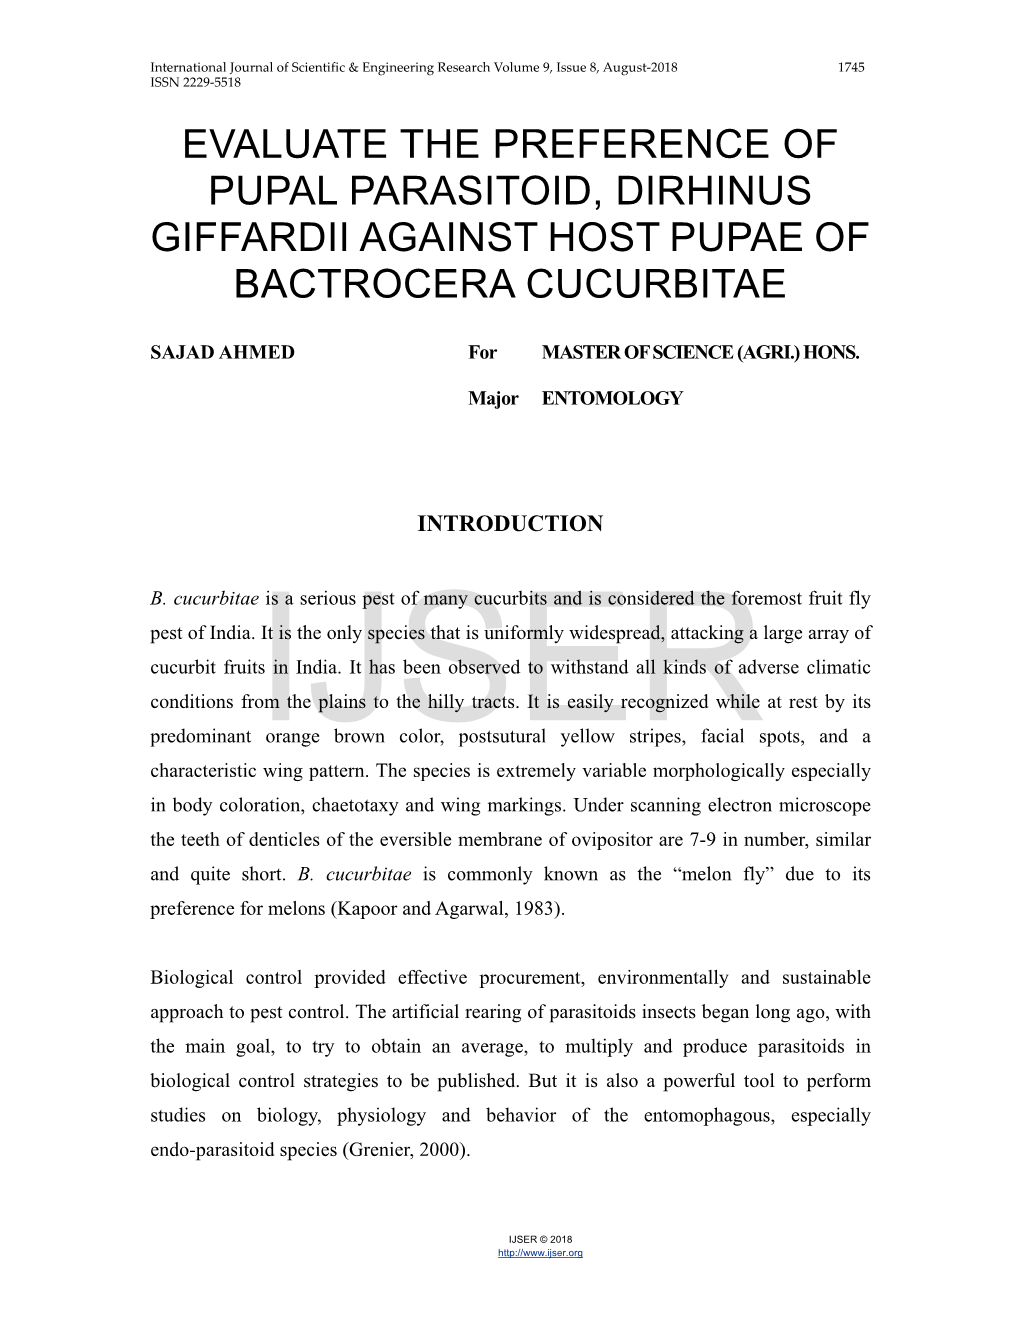 Evaluate the Preference of Pupal Parasitoid, Dirhinus Giffardii Against Host Pupae of Bactrocera Cucurbitae